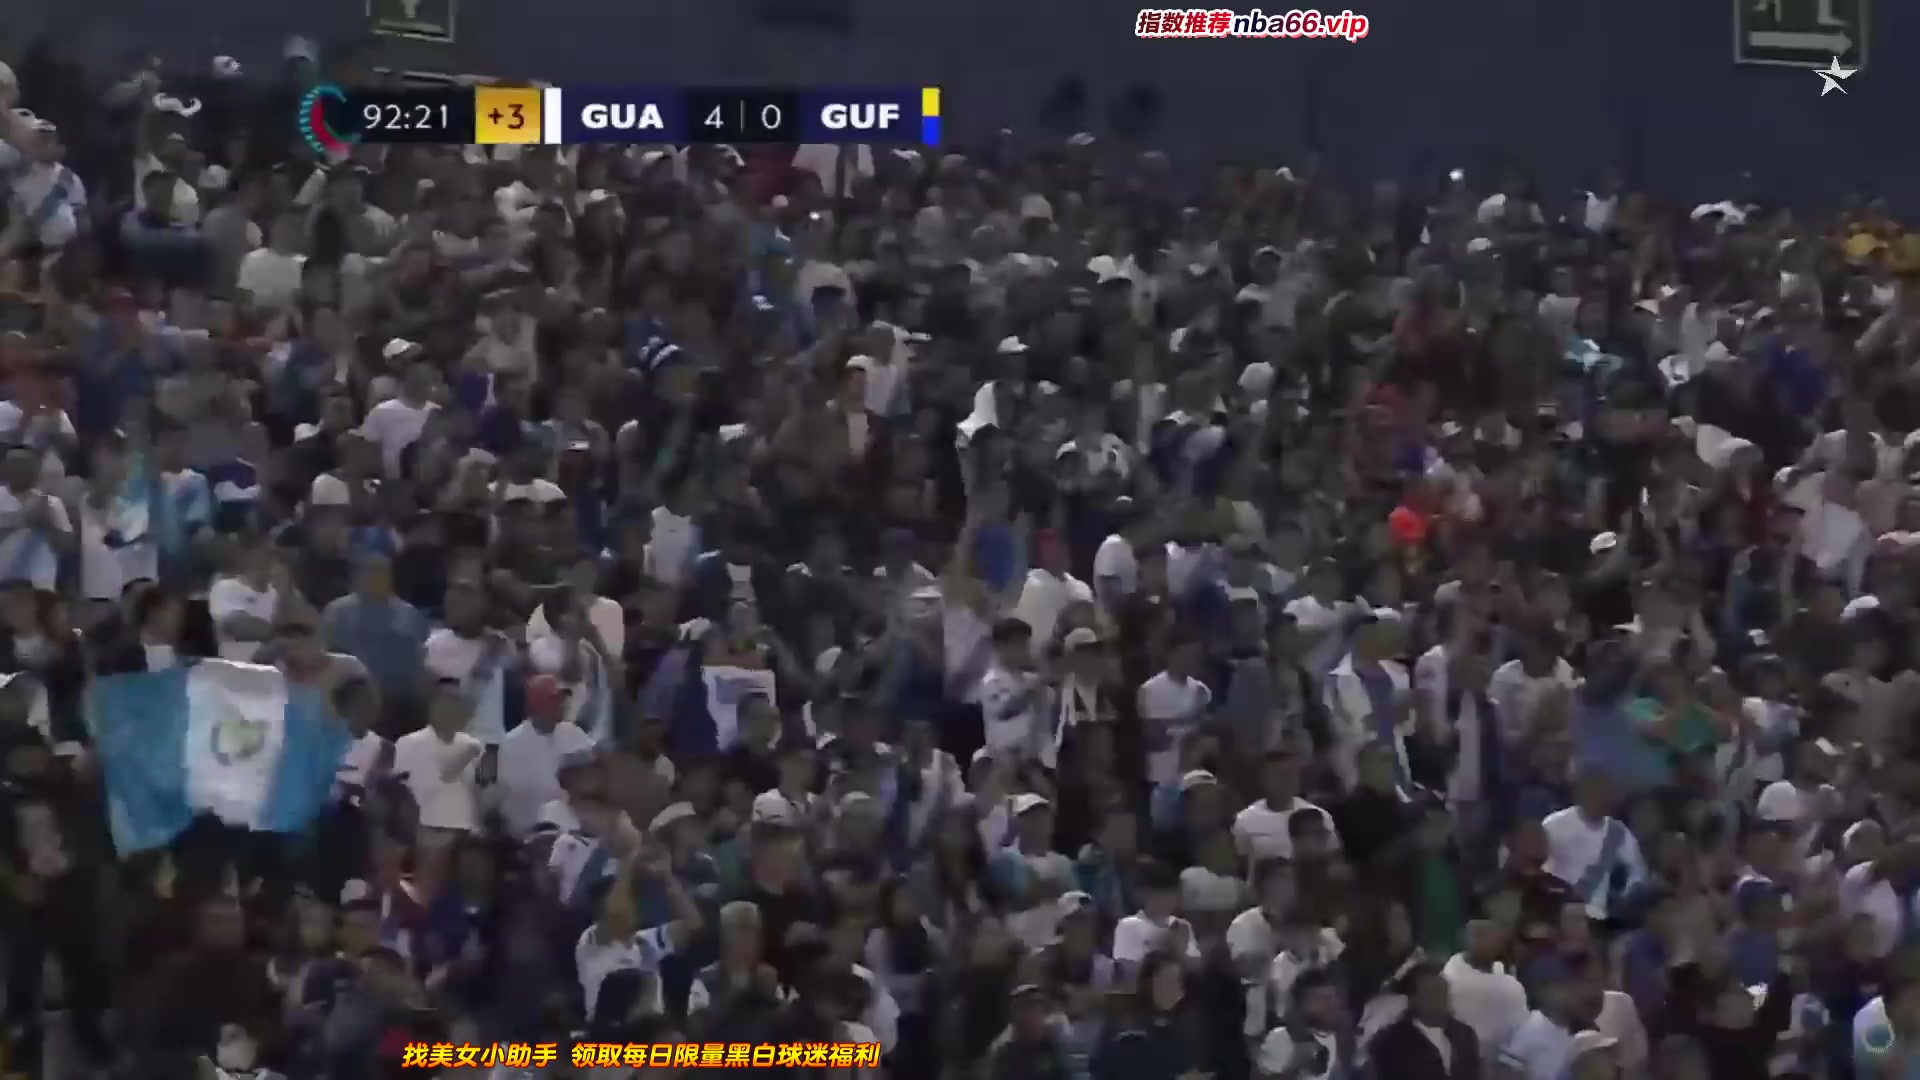 CONCACAF NL Guatemala Vs French Guiana  Goal in 93 min, Score 4:0